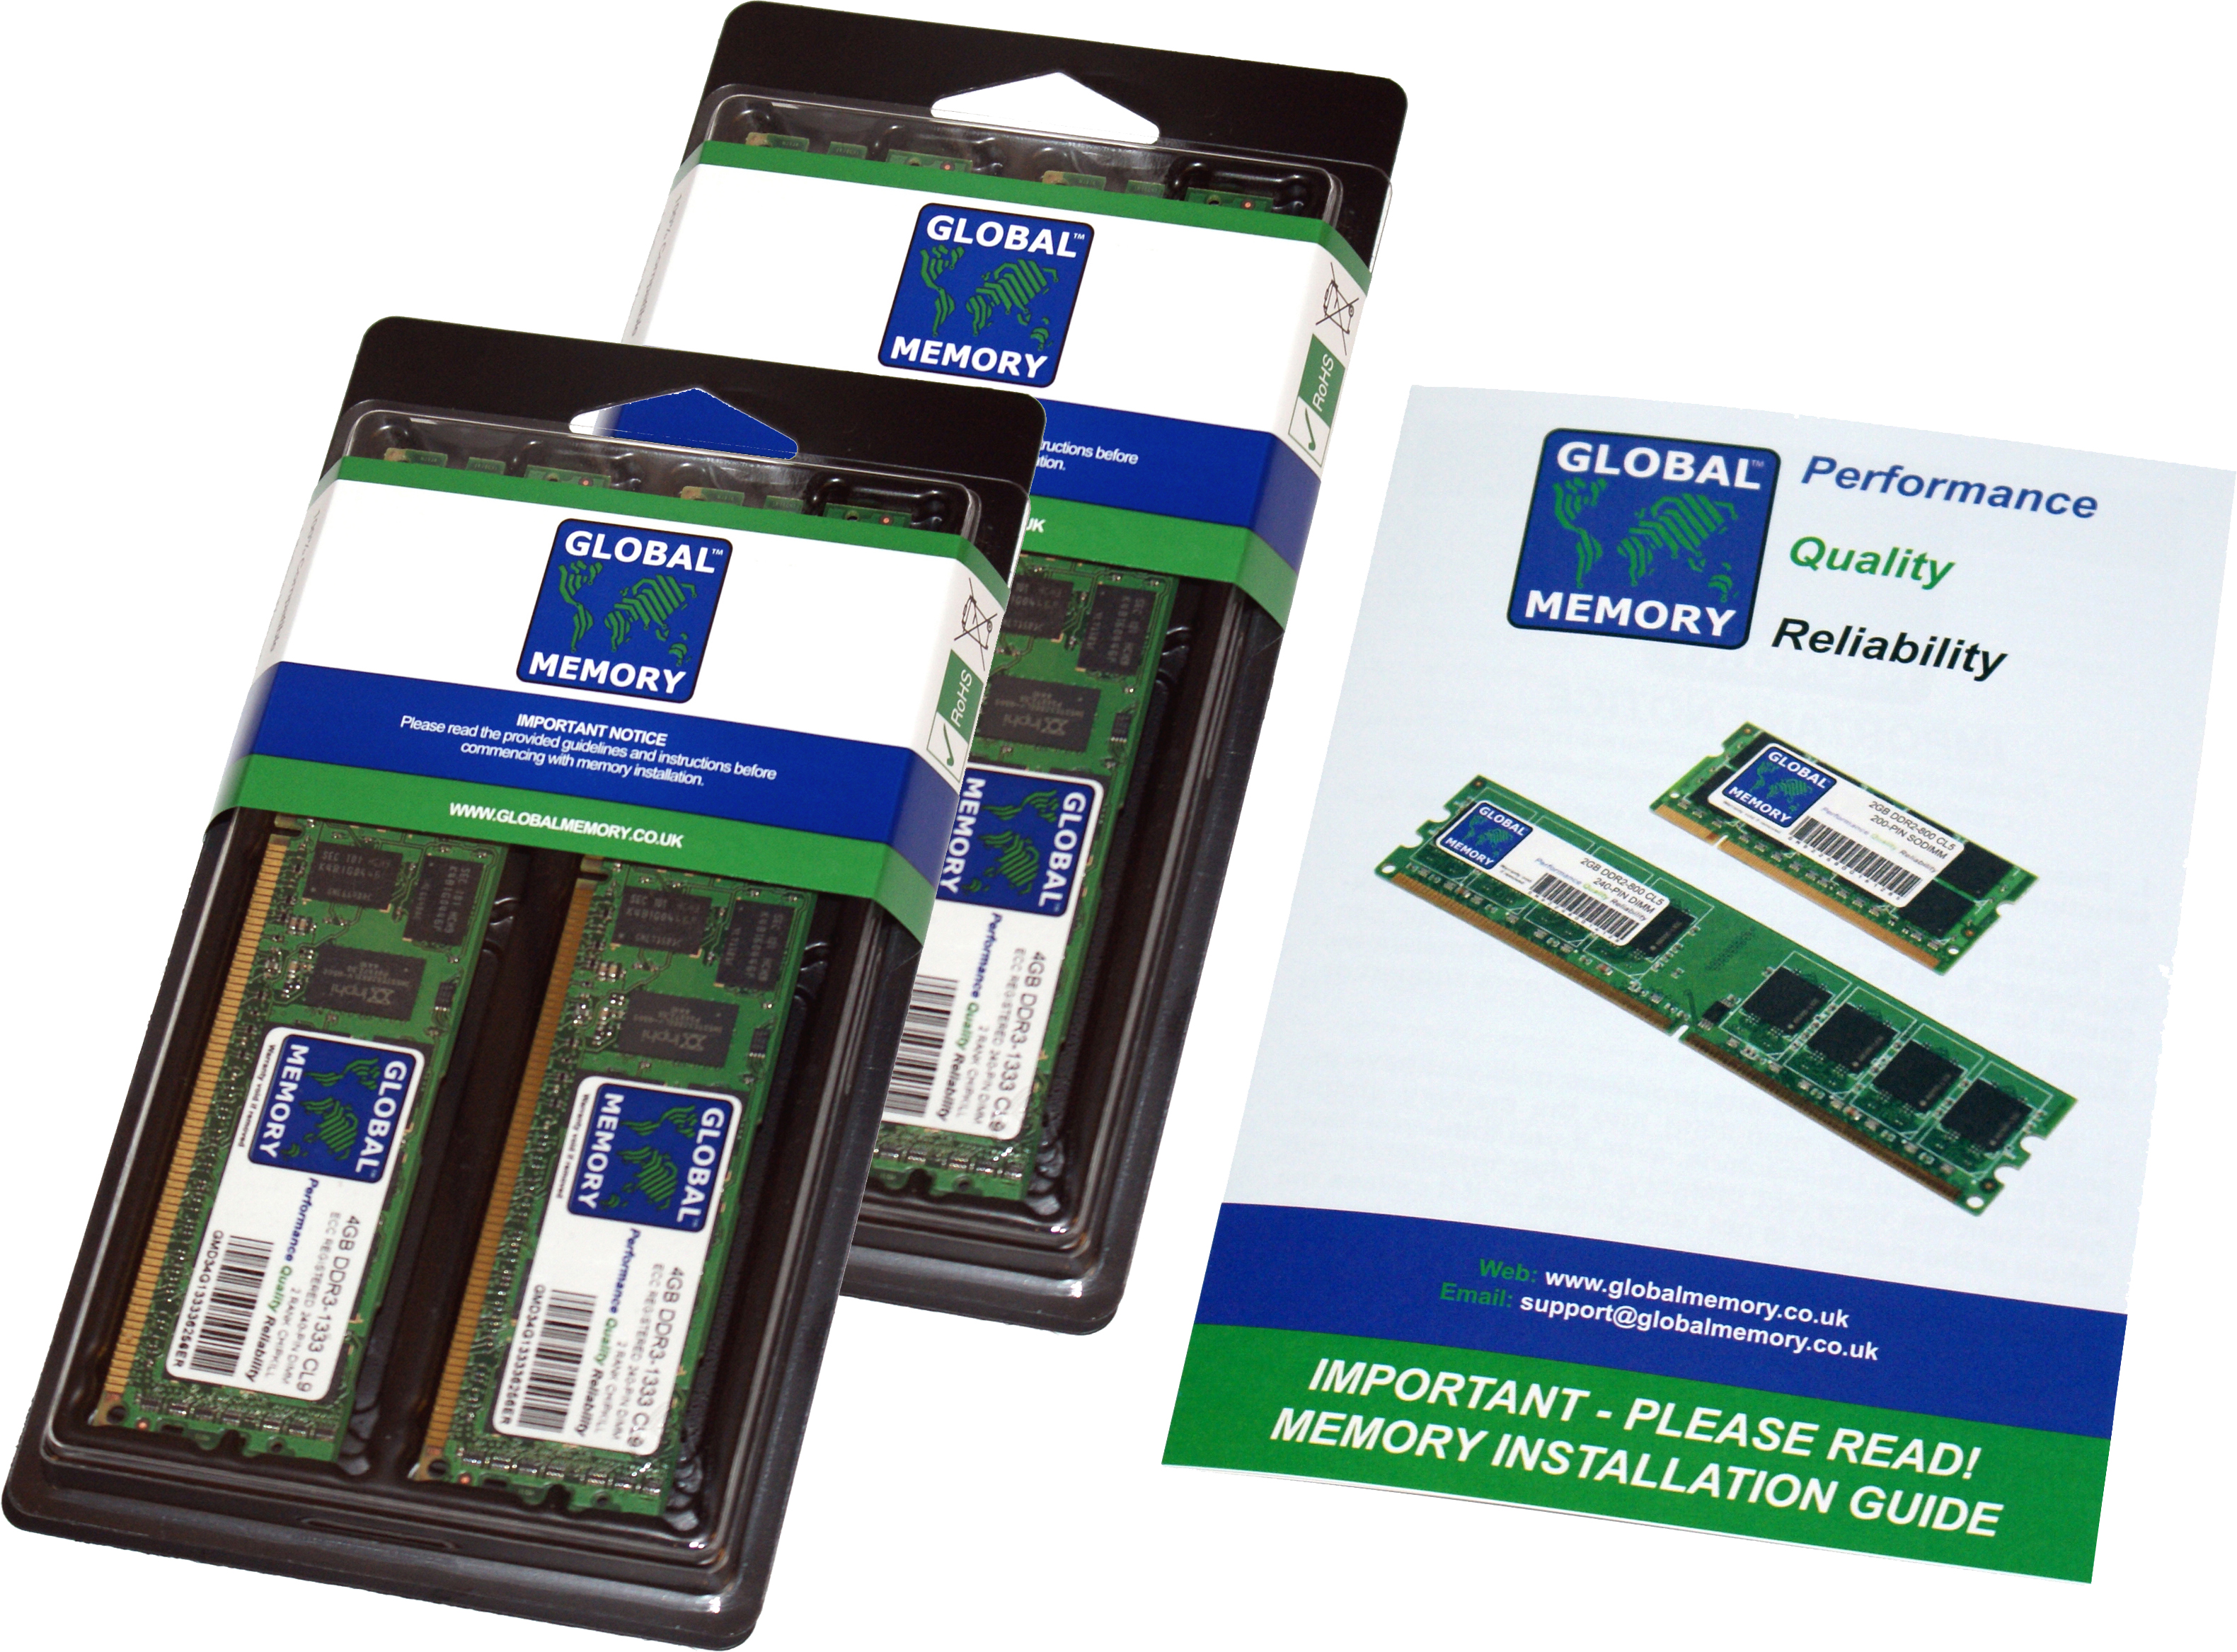 64GB (2 x 32GB) DDR4 2400MHz PC4-19200 288-PIN ECC REGISTERED DIMM (RDIMM) MEMORY RAM KIT FOR ACER SERVERS/WORKSTATIONS (8 RANK KIT CHIPKILL)